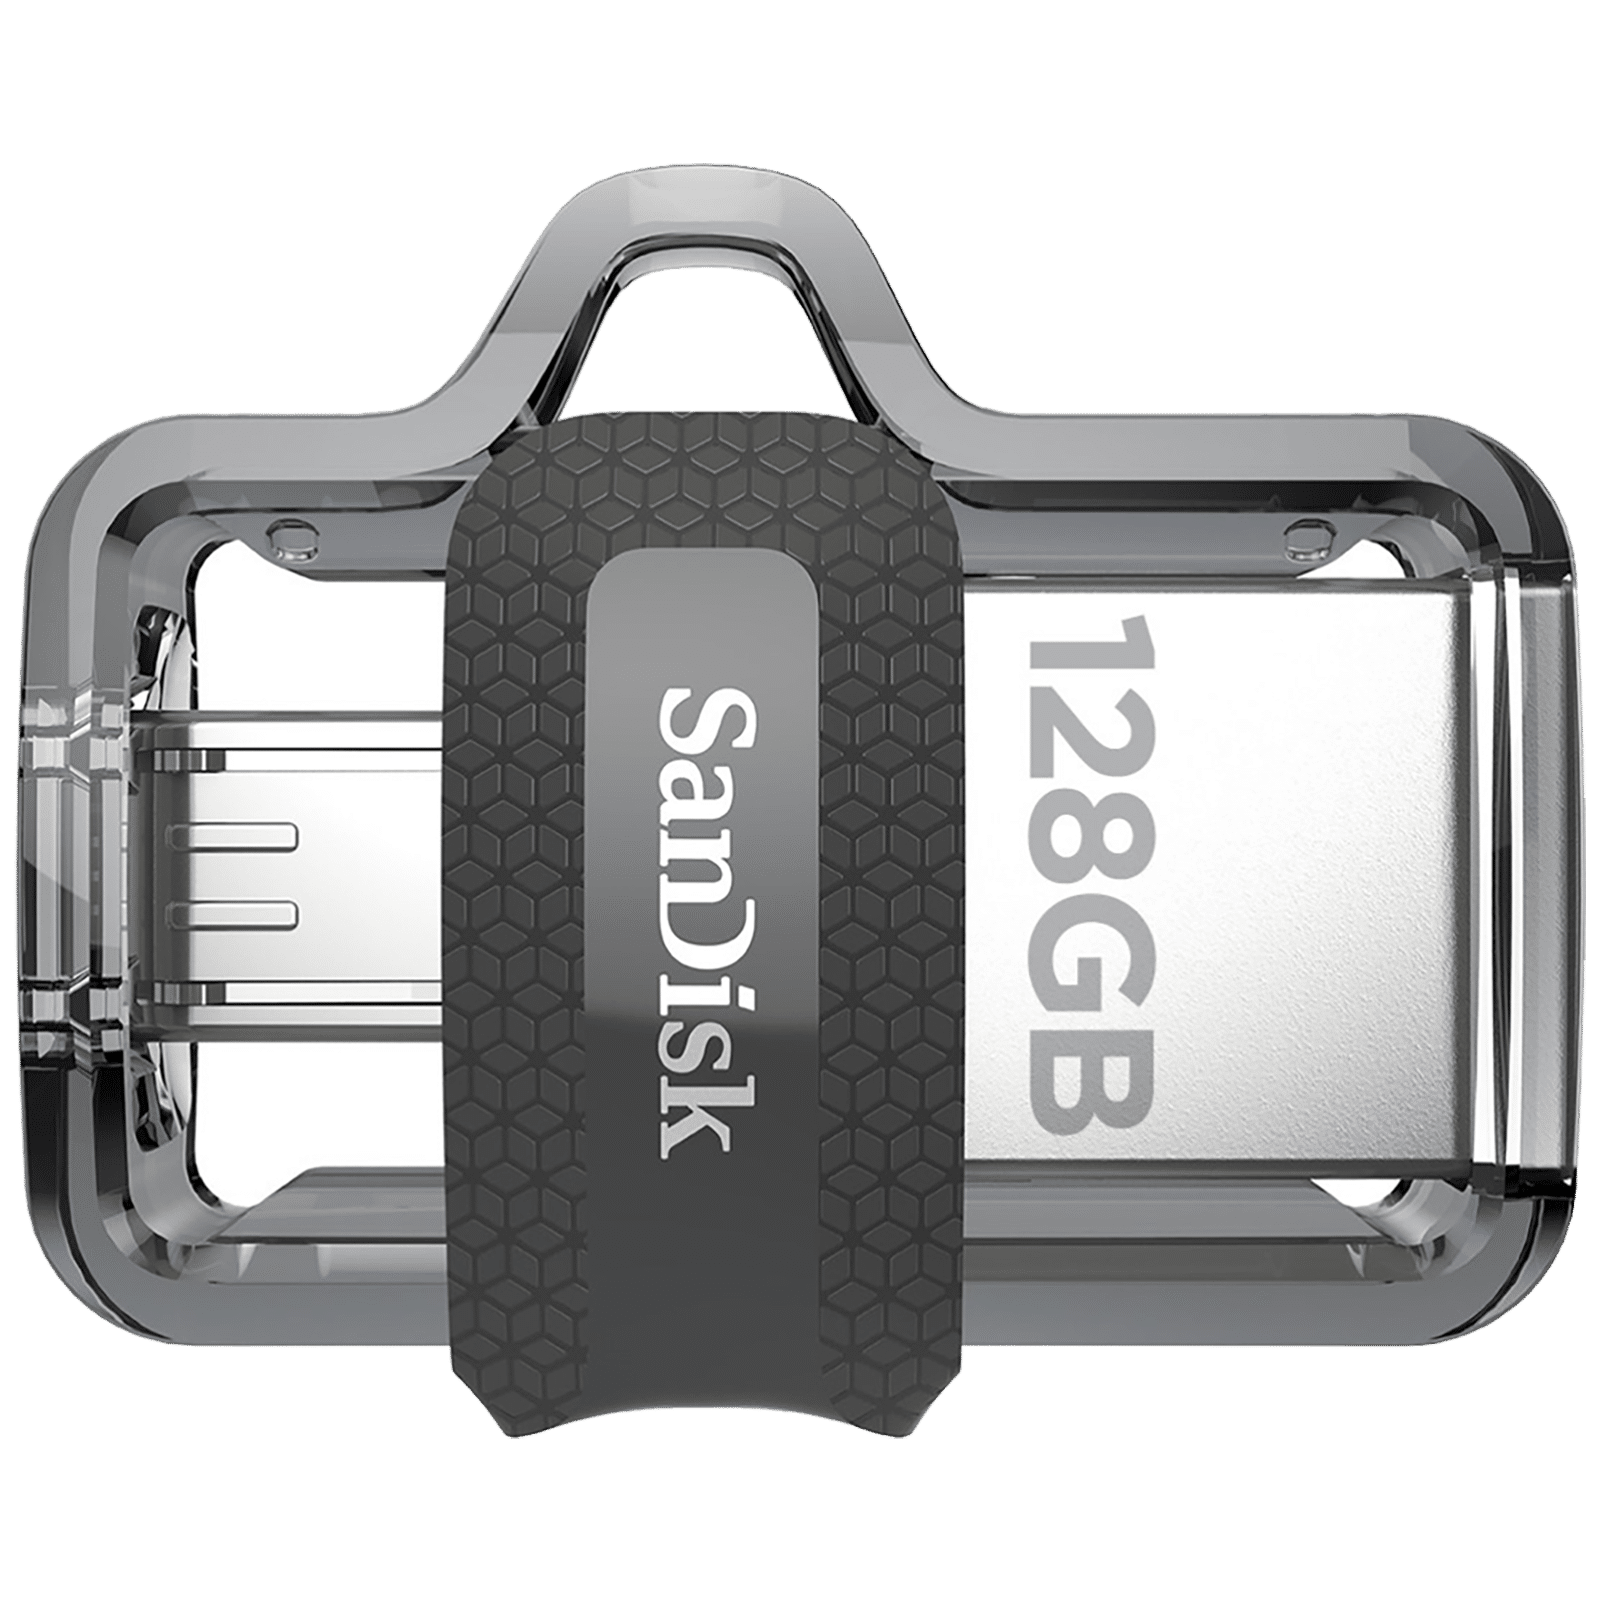 Buy Sandisk Ultra 128GB USB 3.0 Pen Drive (Black) Online - Croma